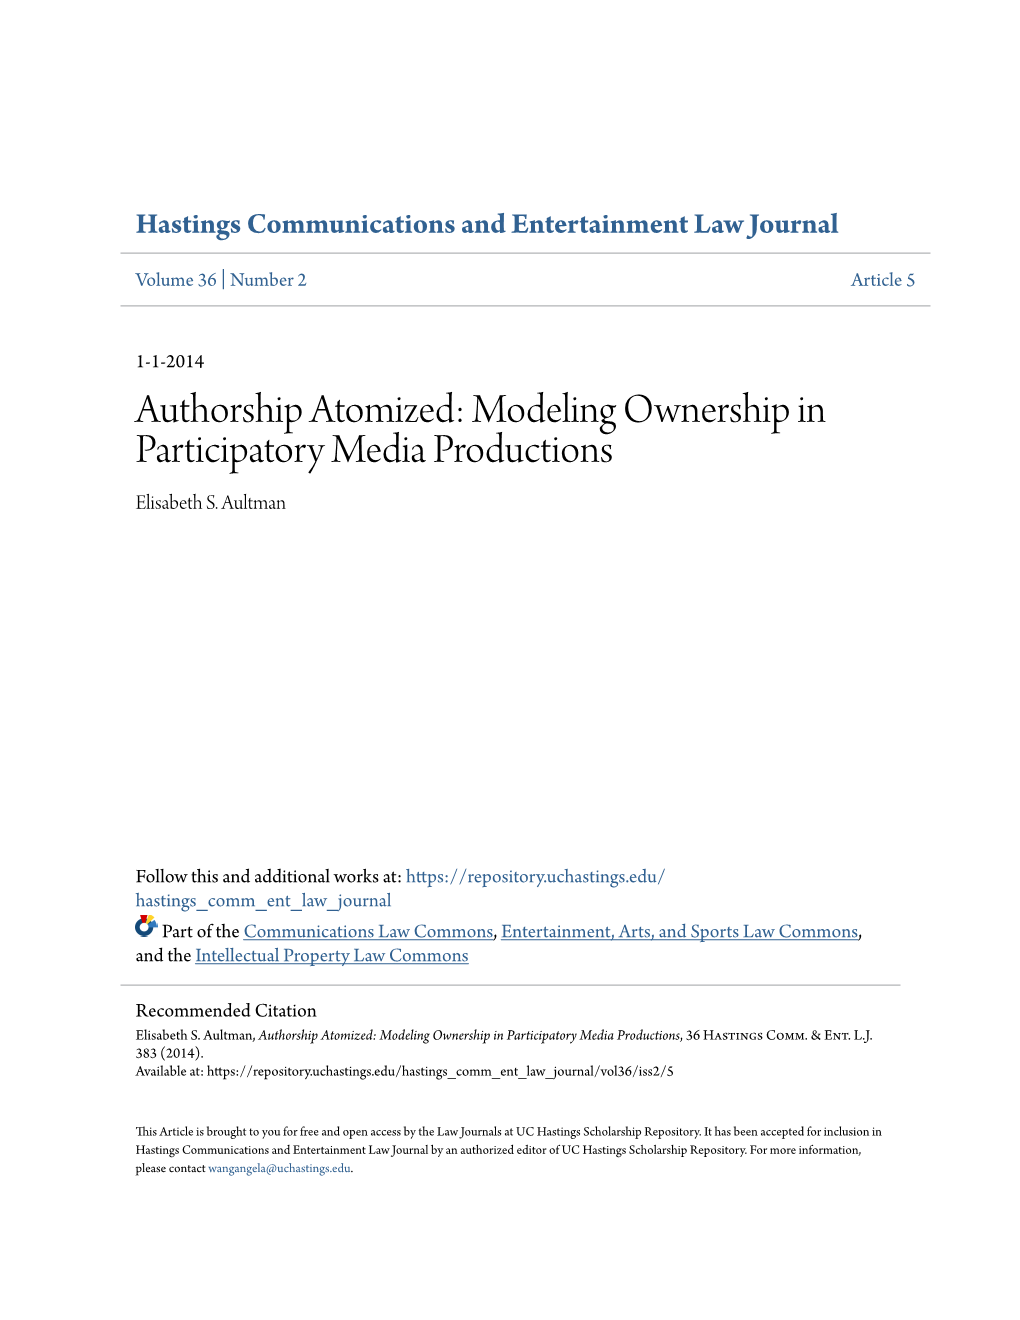 Authorship Atomized: Modeling Ownership in Participatory Media Productions Elisabeth S